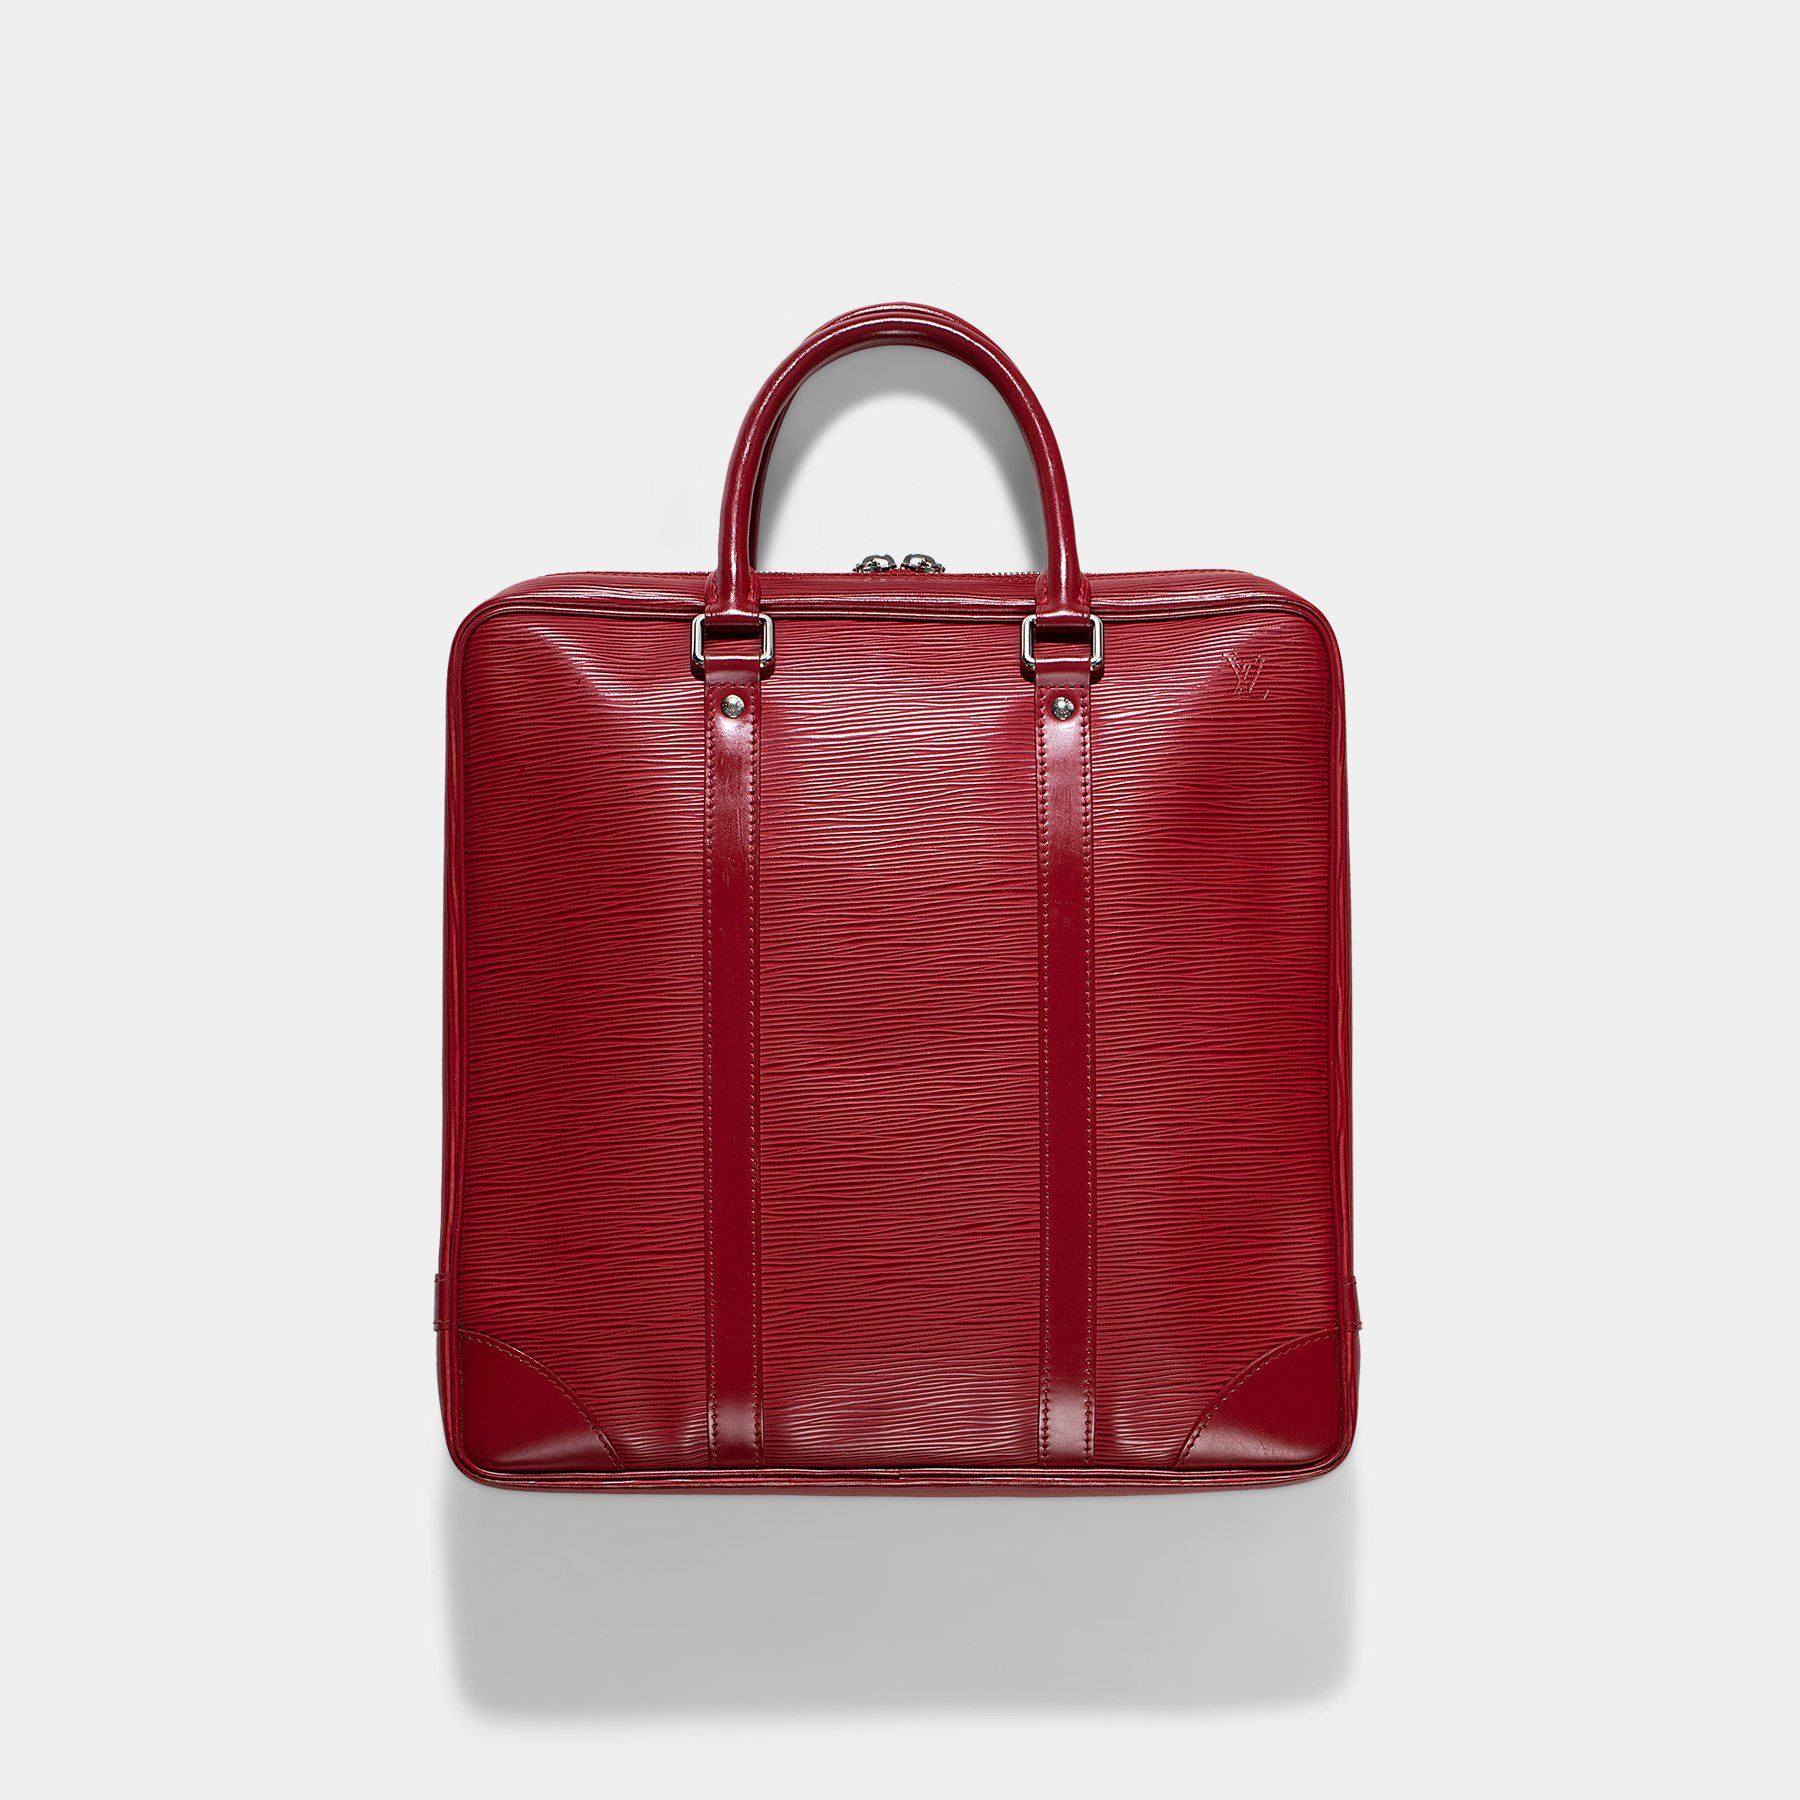 Louis Vuitton x Supreme Luggage Tag Set Epi Black/Red - US